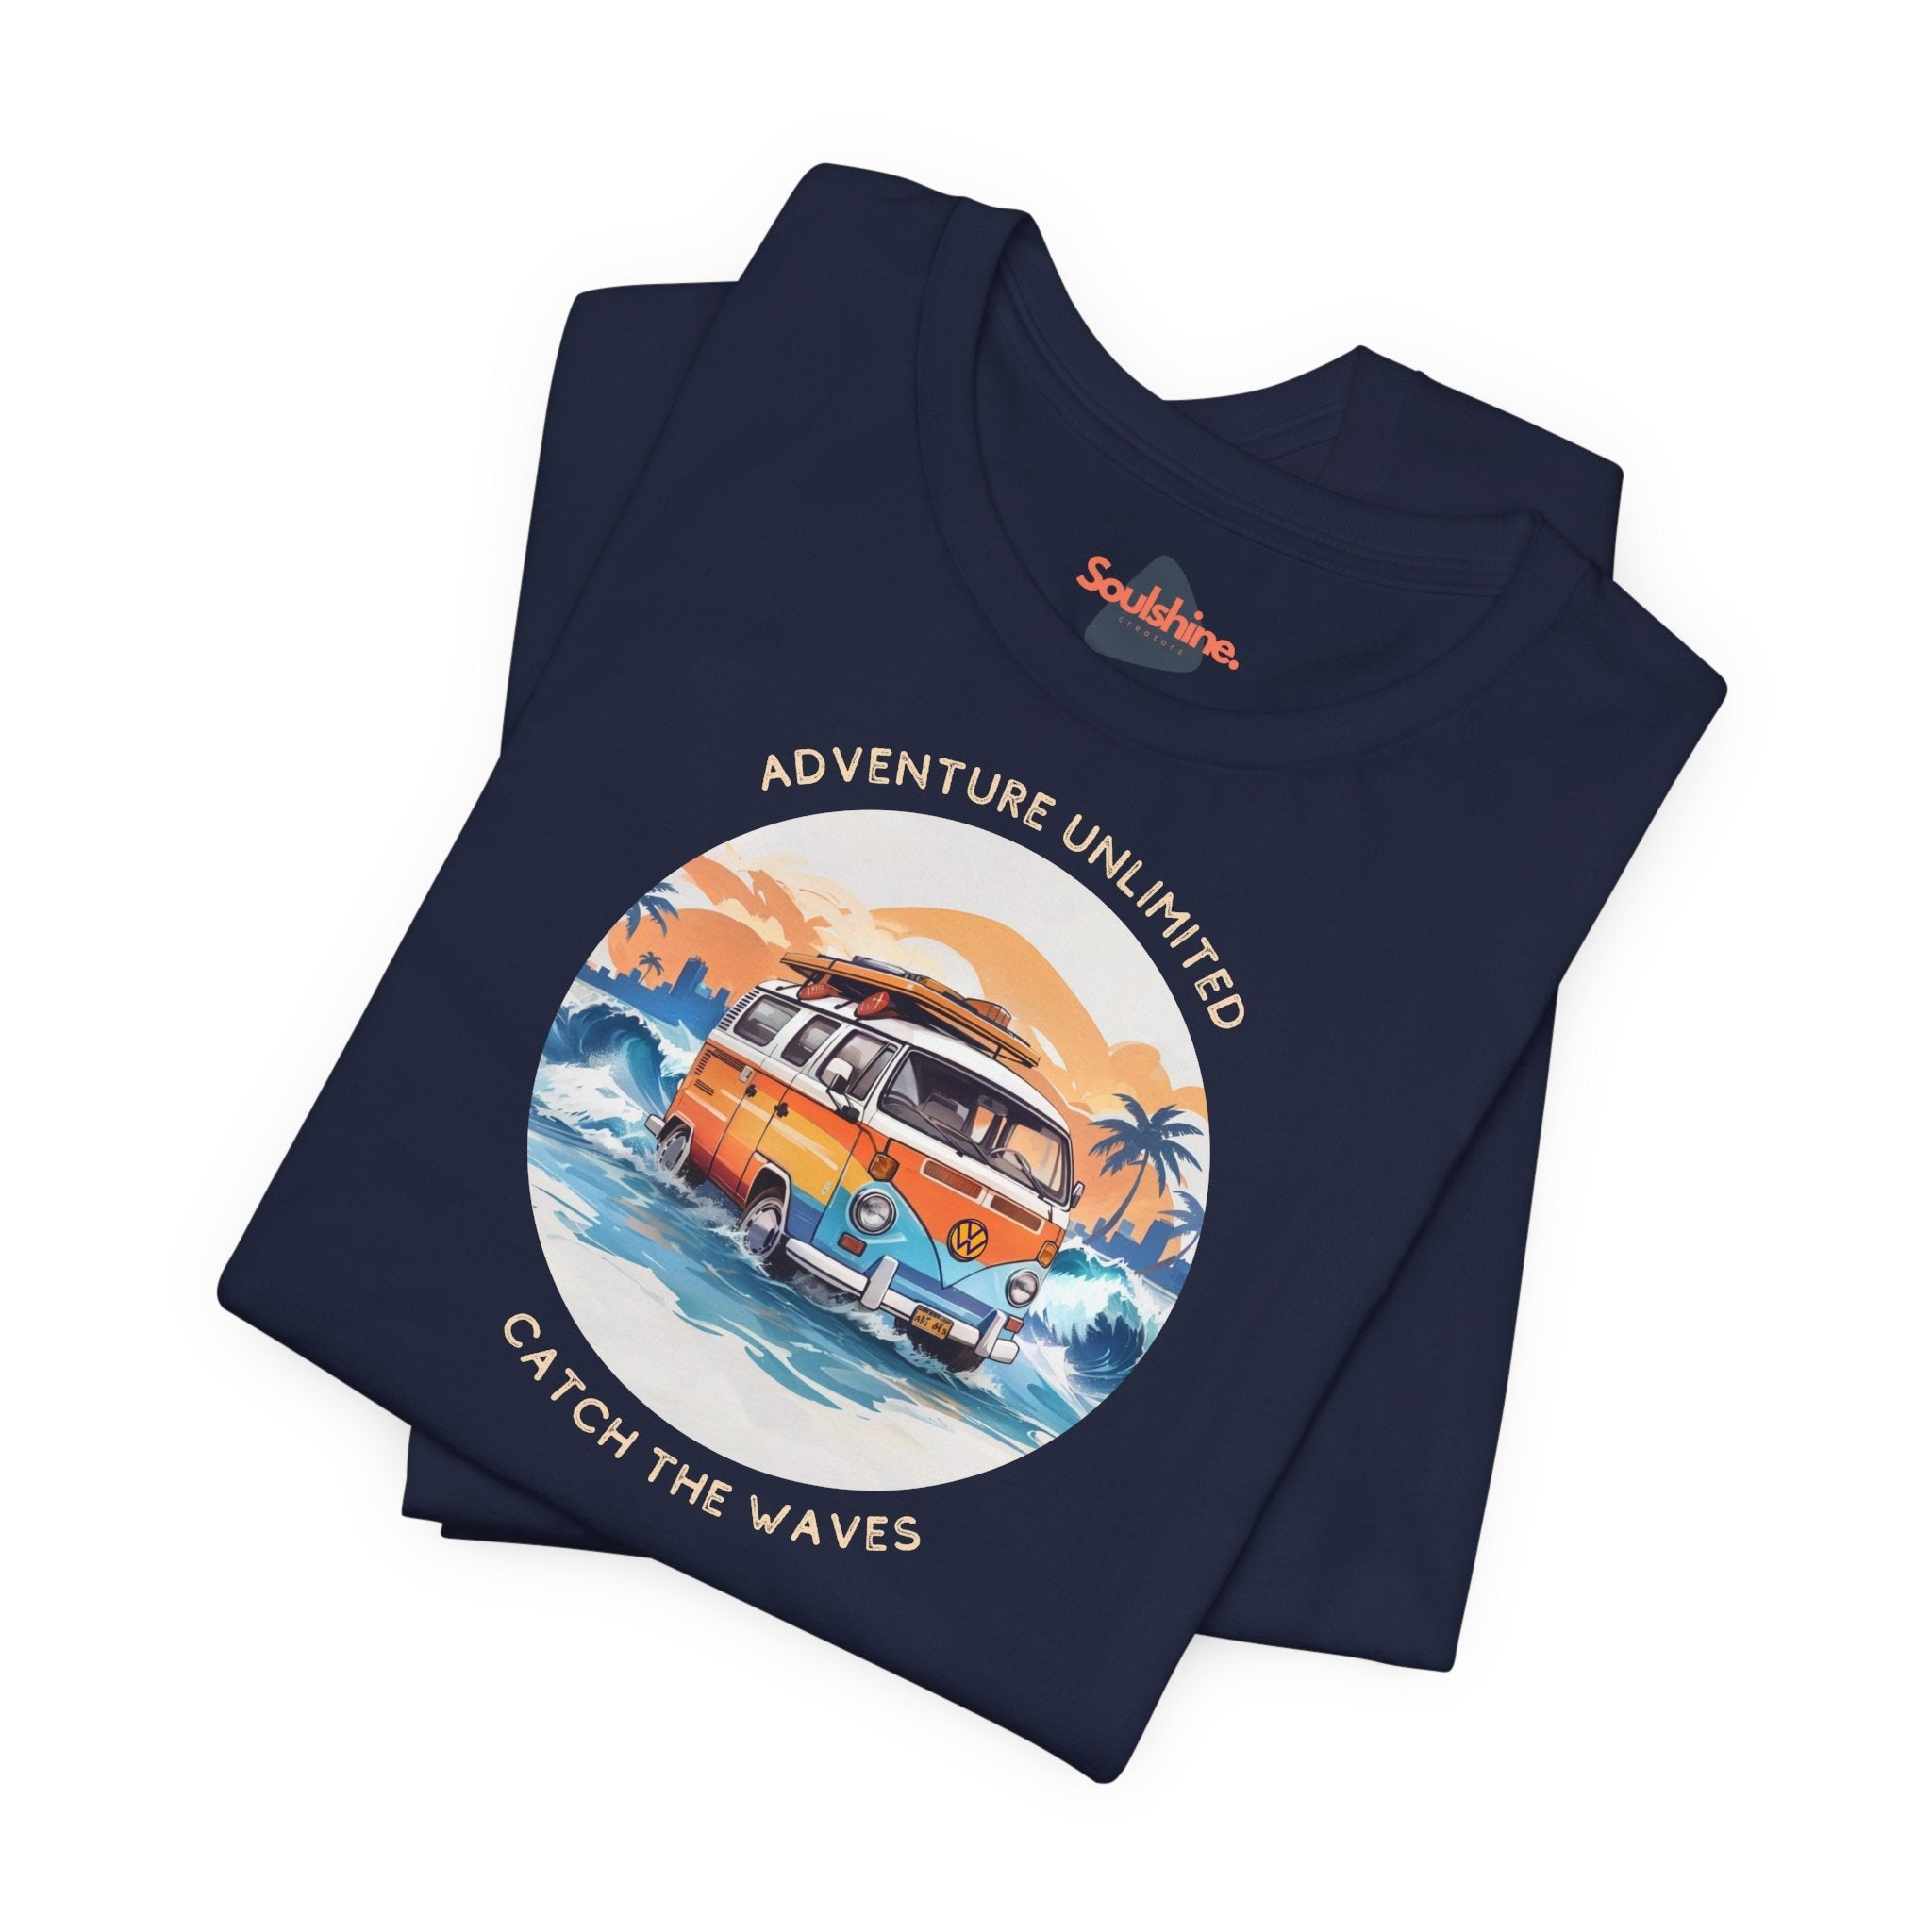 Adventure Unlimited Surfing T-Shirt - Direct-to-Garment Printed Navy Van Driving Through Ocean